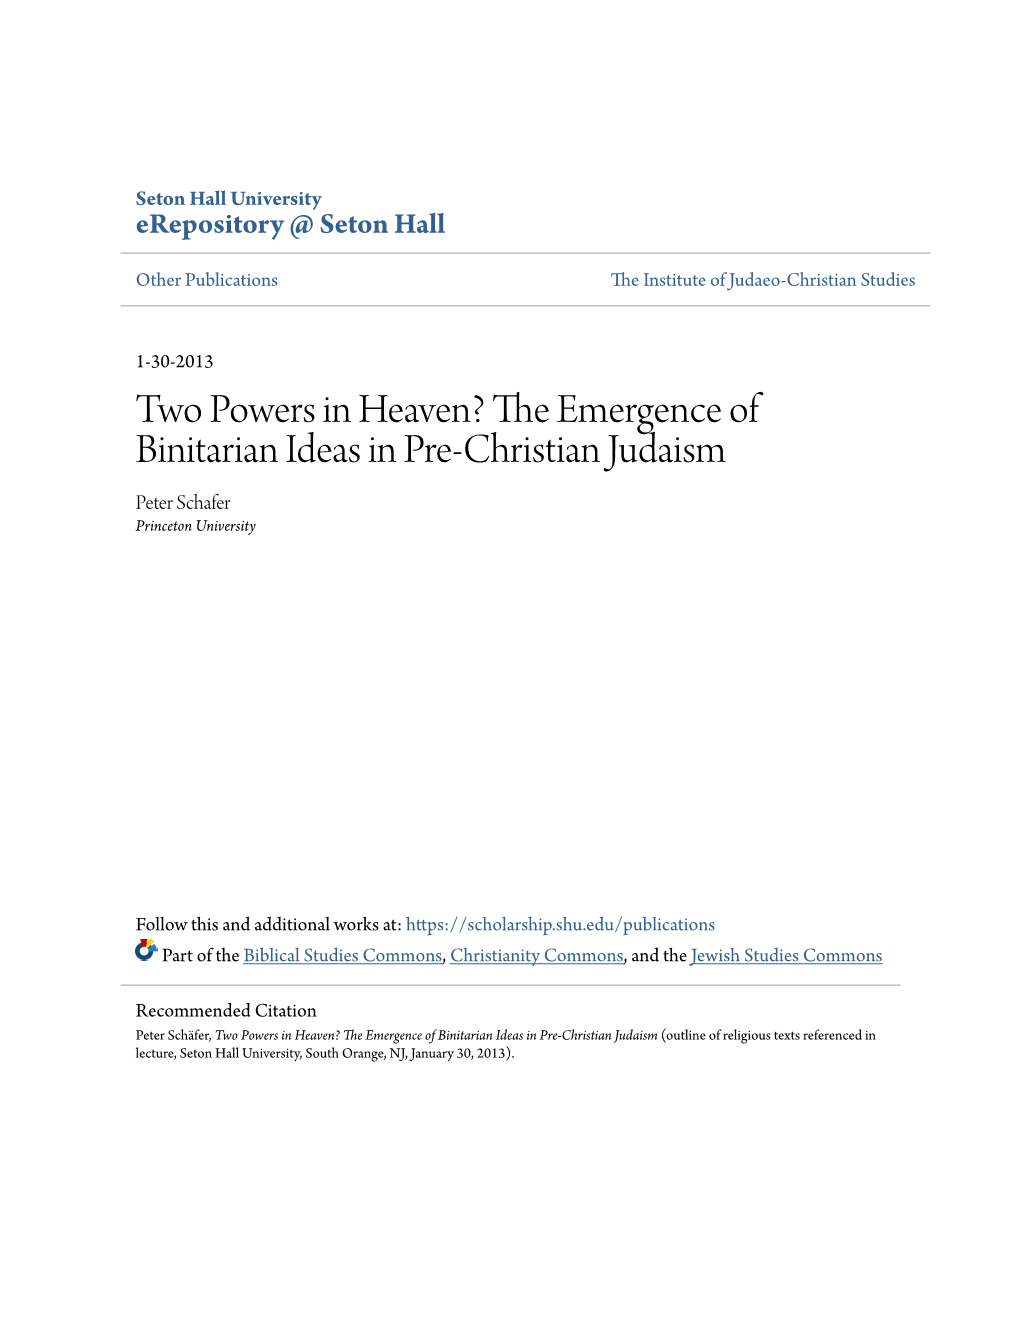 Two Powers in Heaven? the Emergence of Binitarian Ideas In